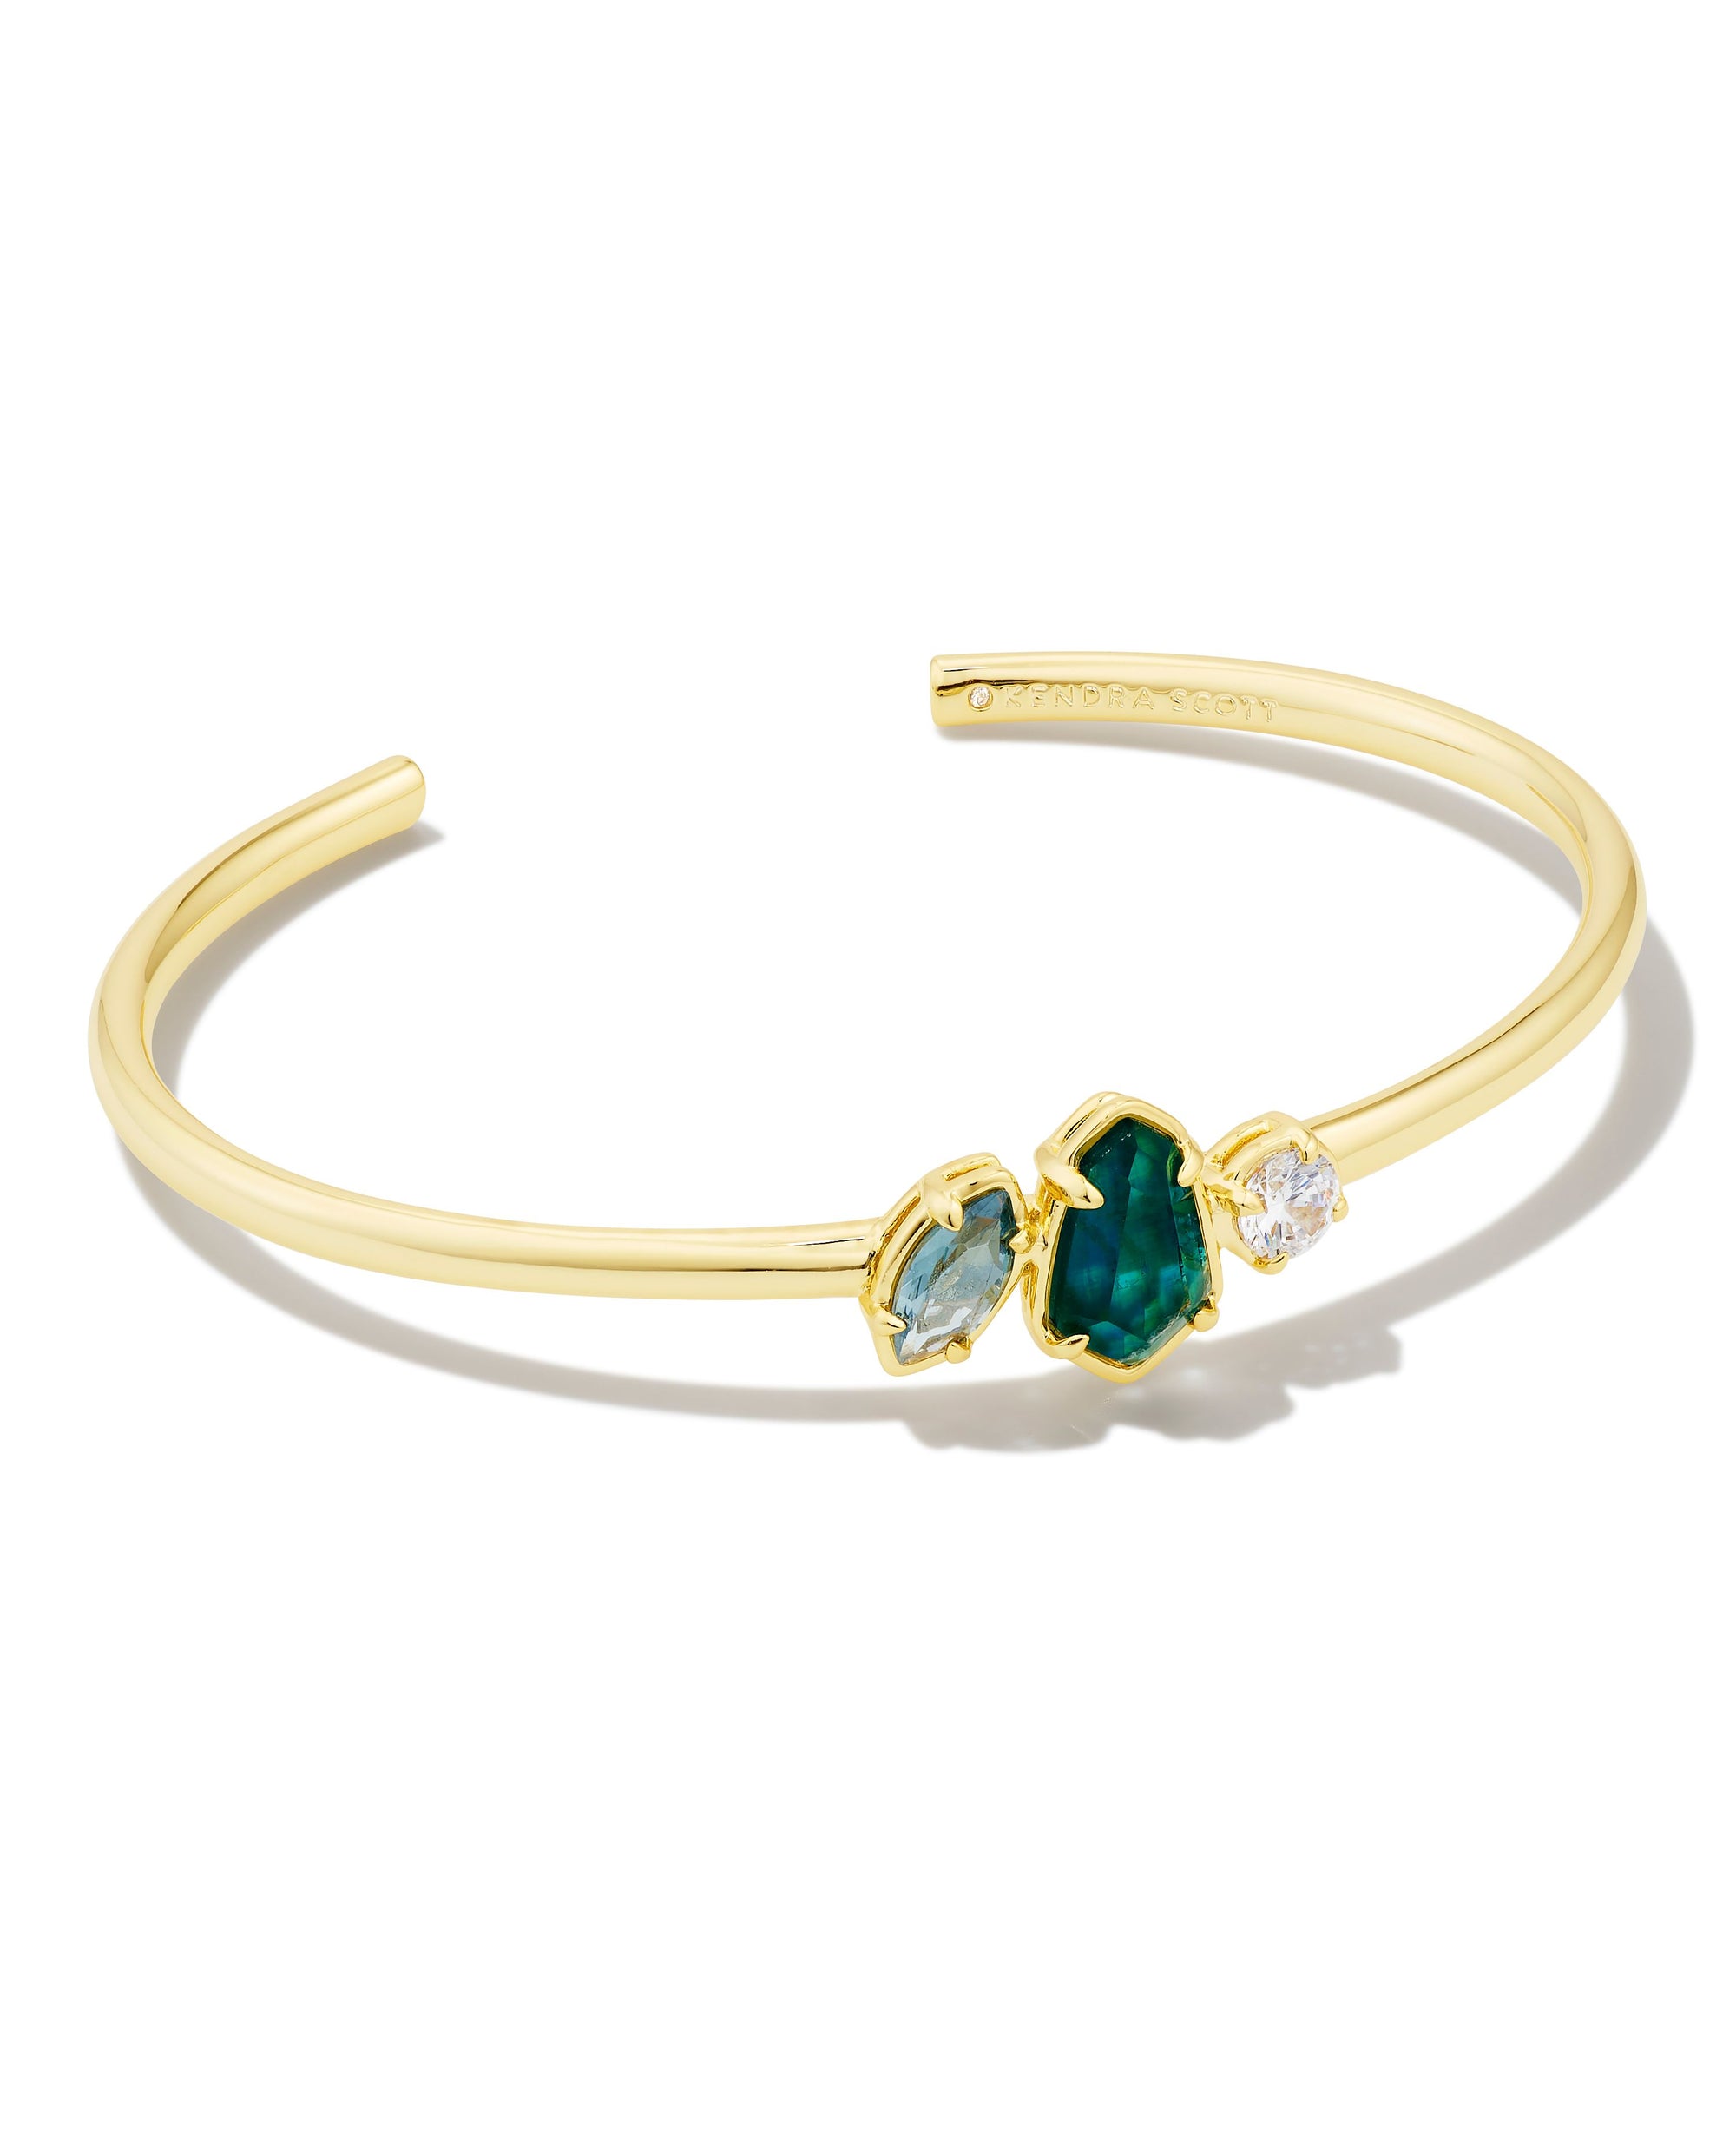 Alexandria Cuff Bracelet in Gold Teal Green